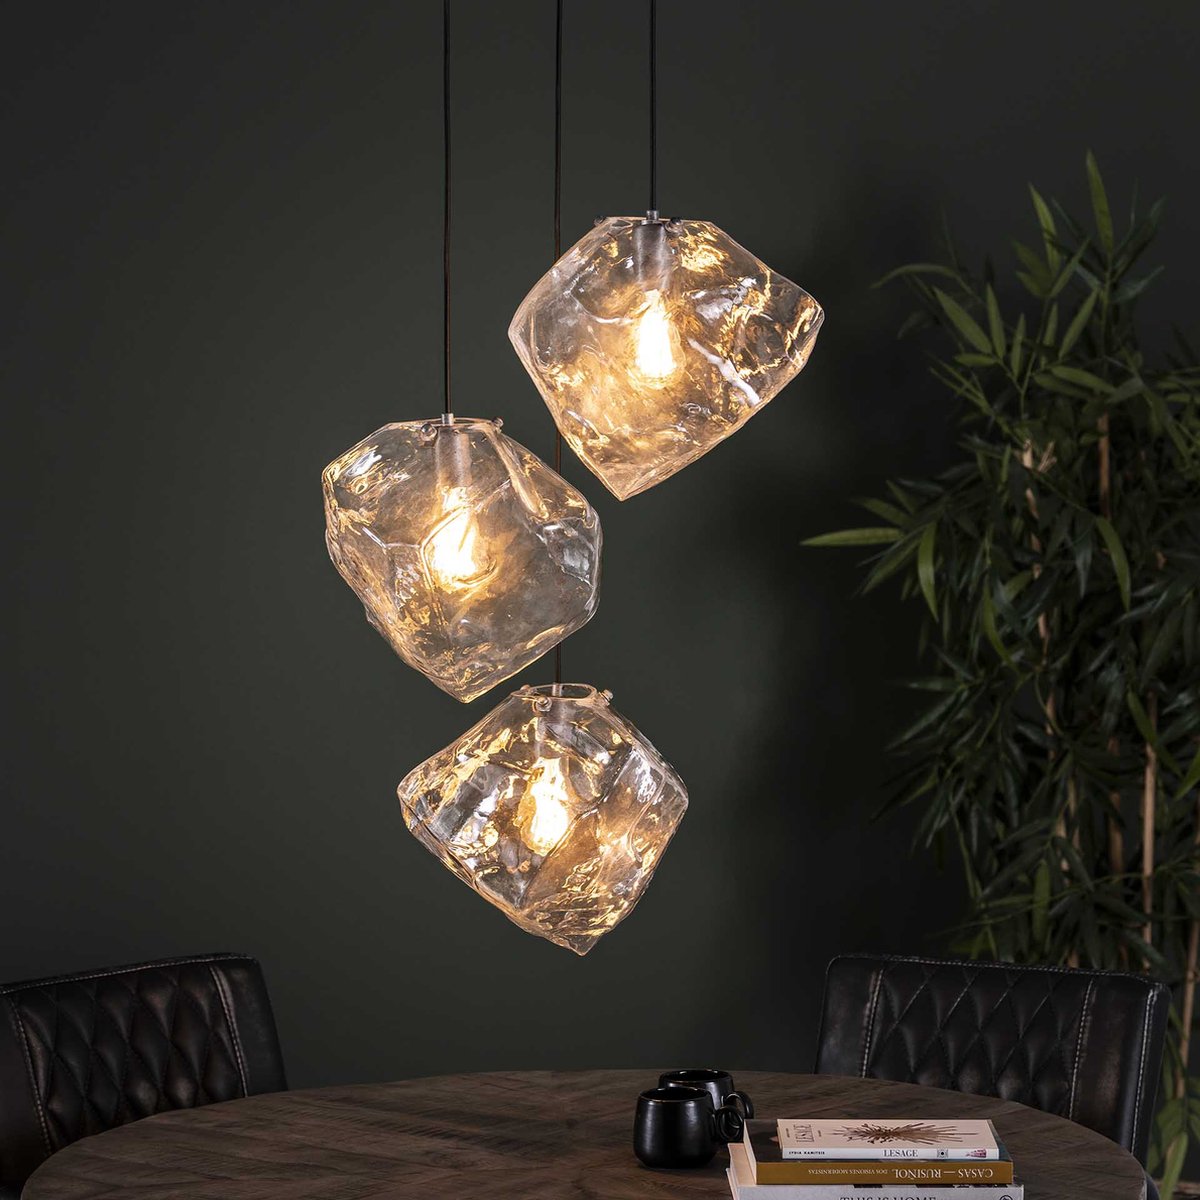 Hanglamp Rock getrapt transparant glas | 3 lichts | charcoal / grijs / zwart | glas / metaal | 150 cm hoog | eetkamer / woonkamer lamp | modern / sfeervol design